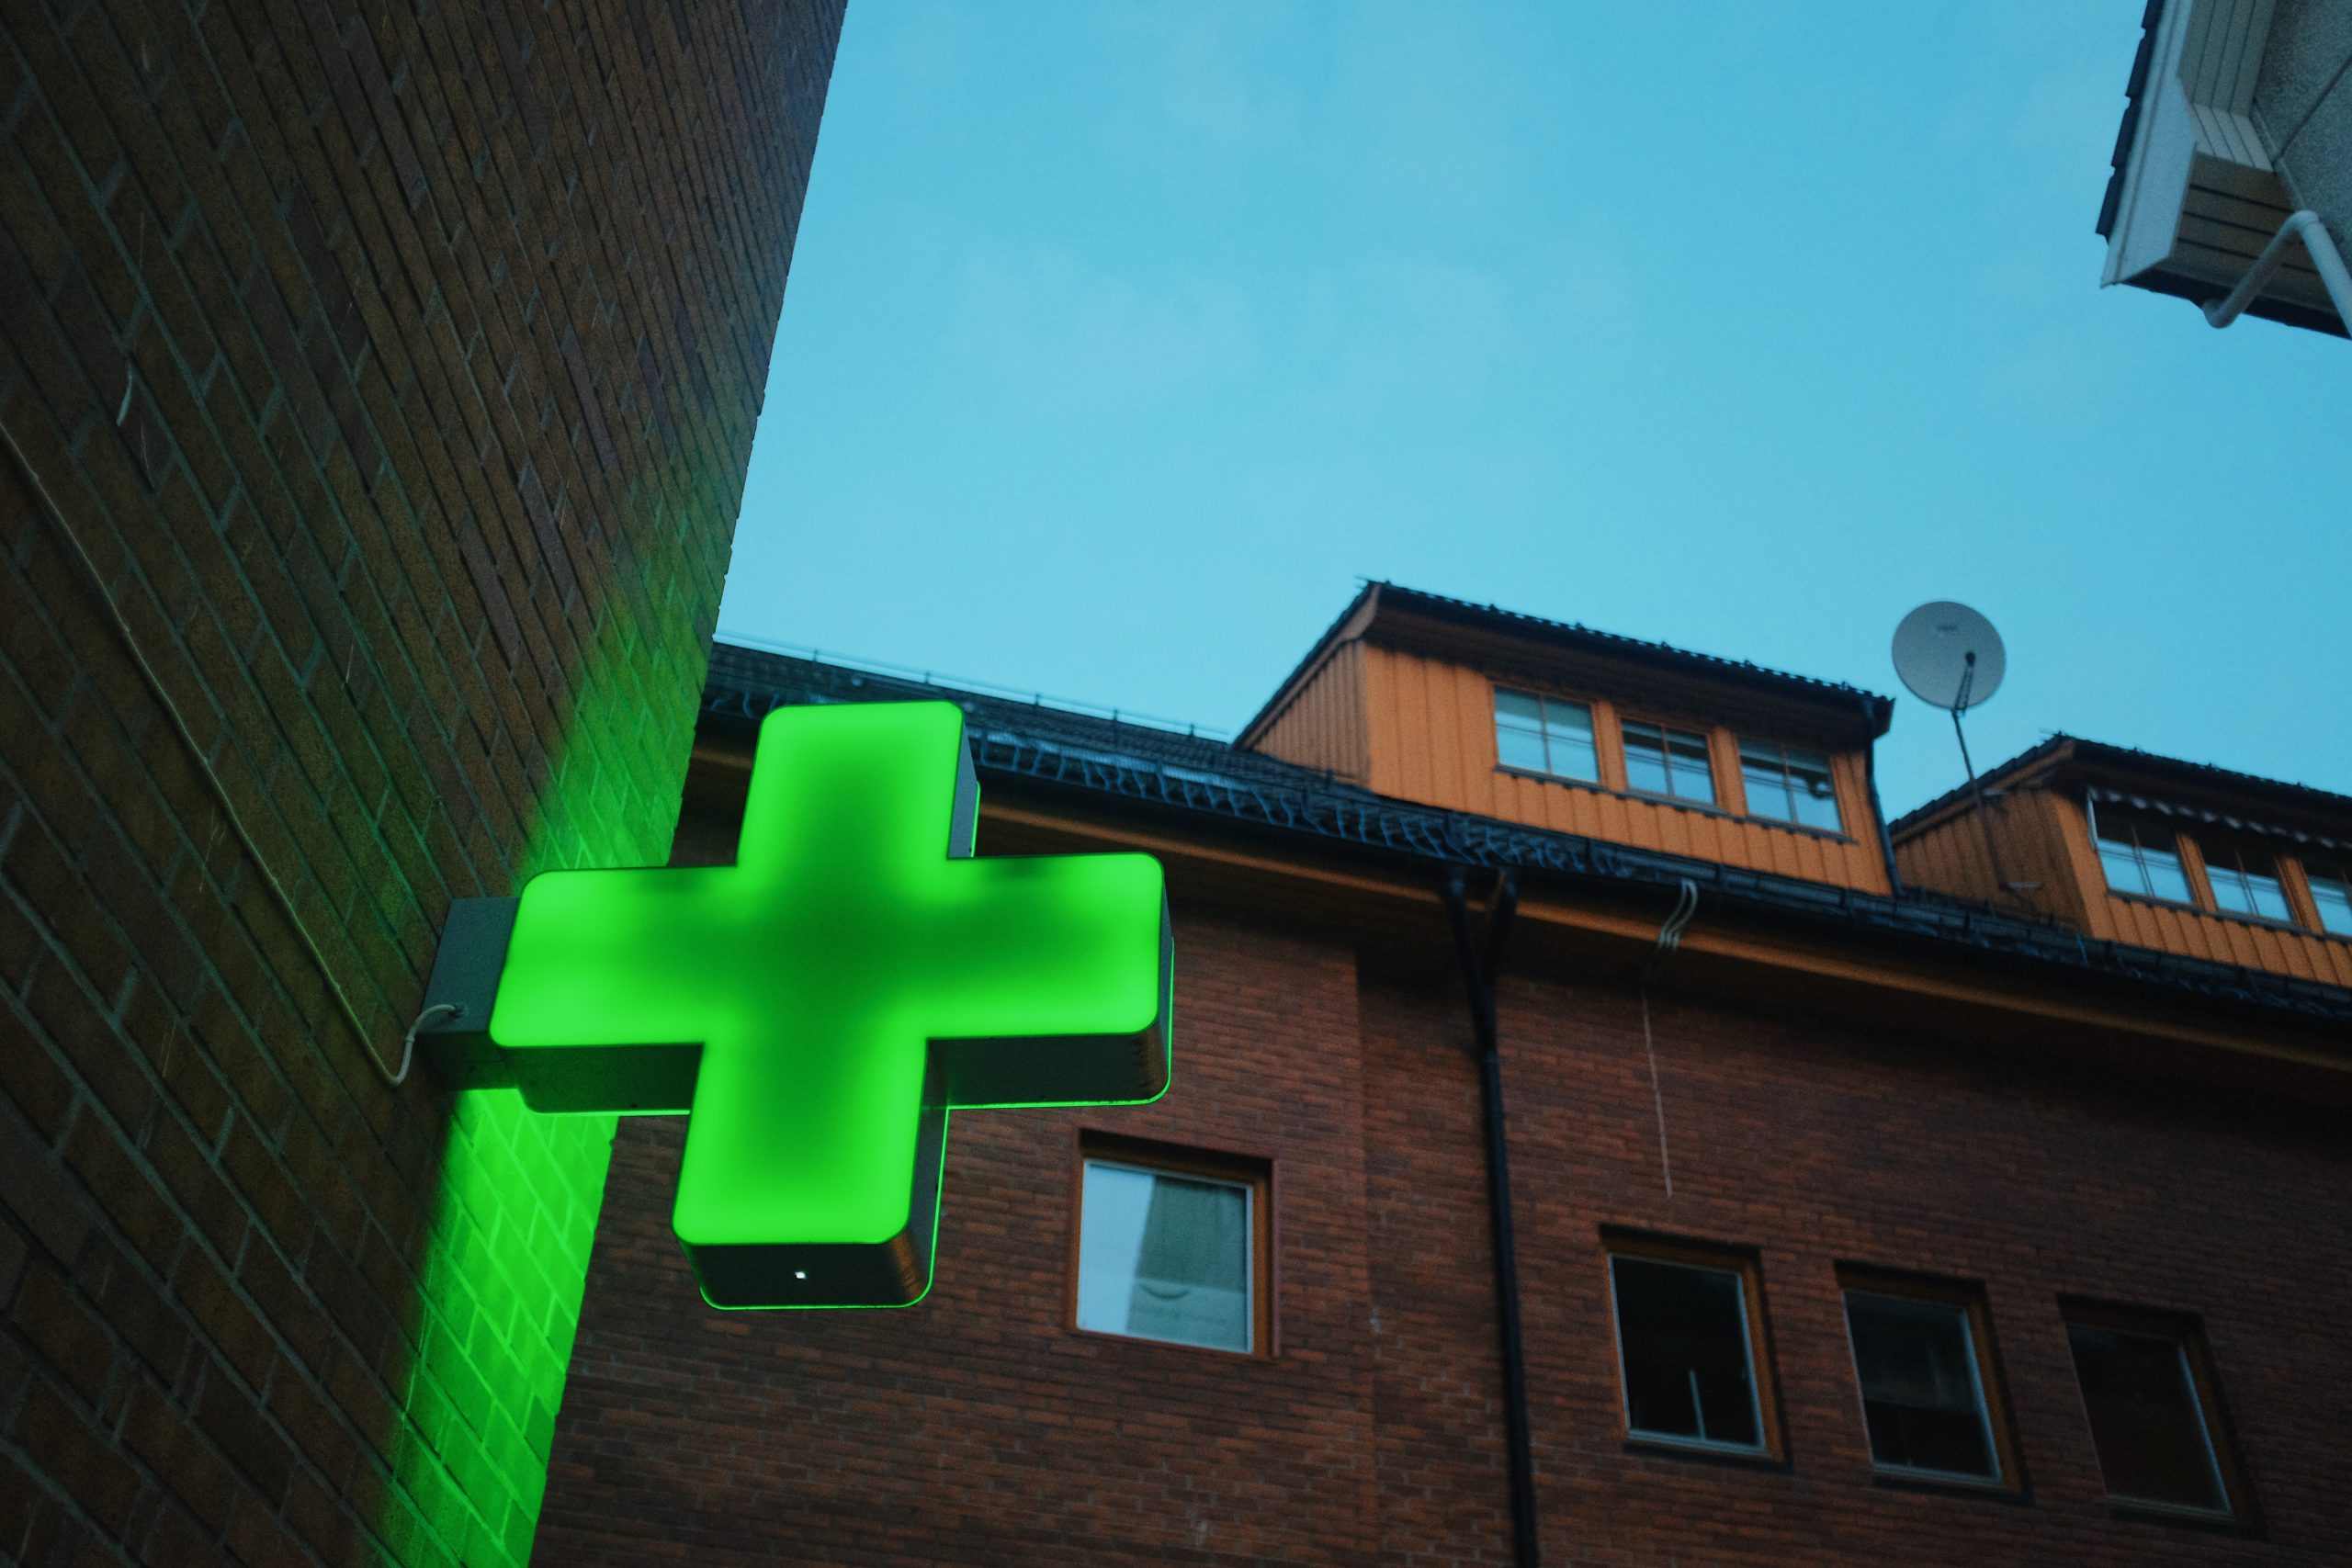 green neon cross pharmacy hospital sign on a buil 2021 12 09 09 44 53 utc scaled